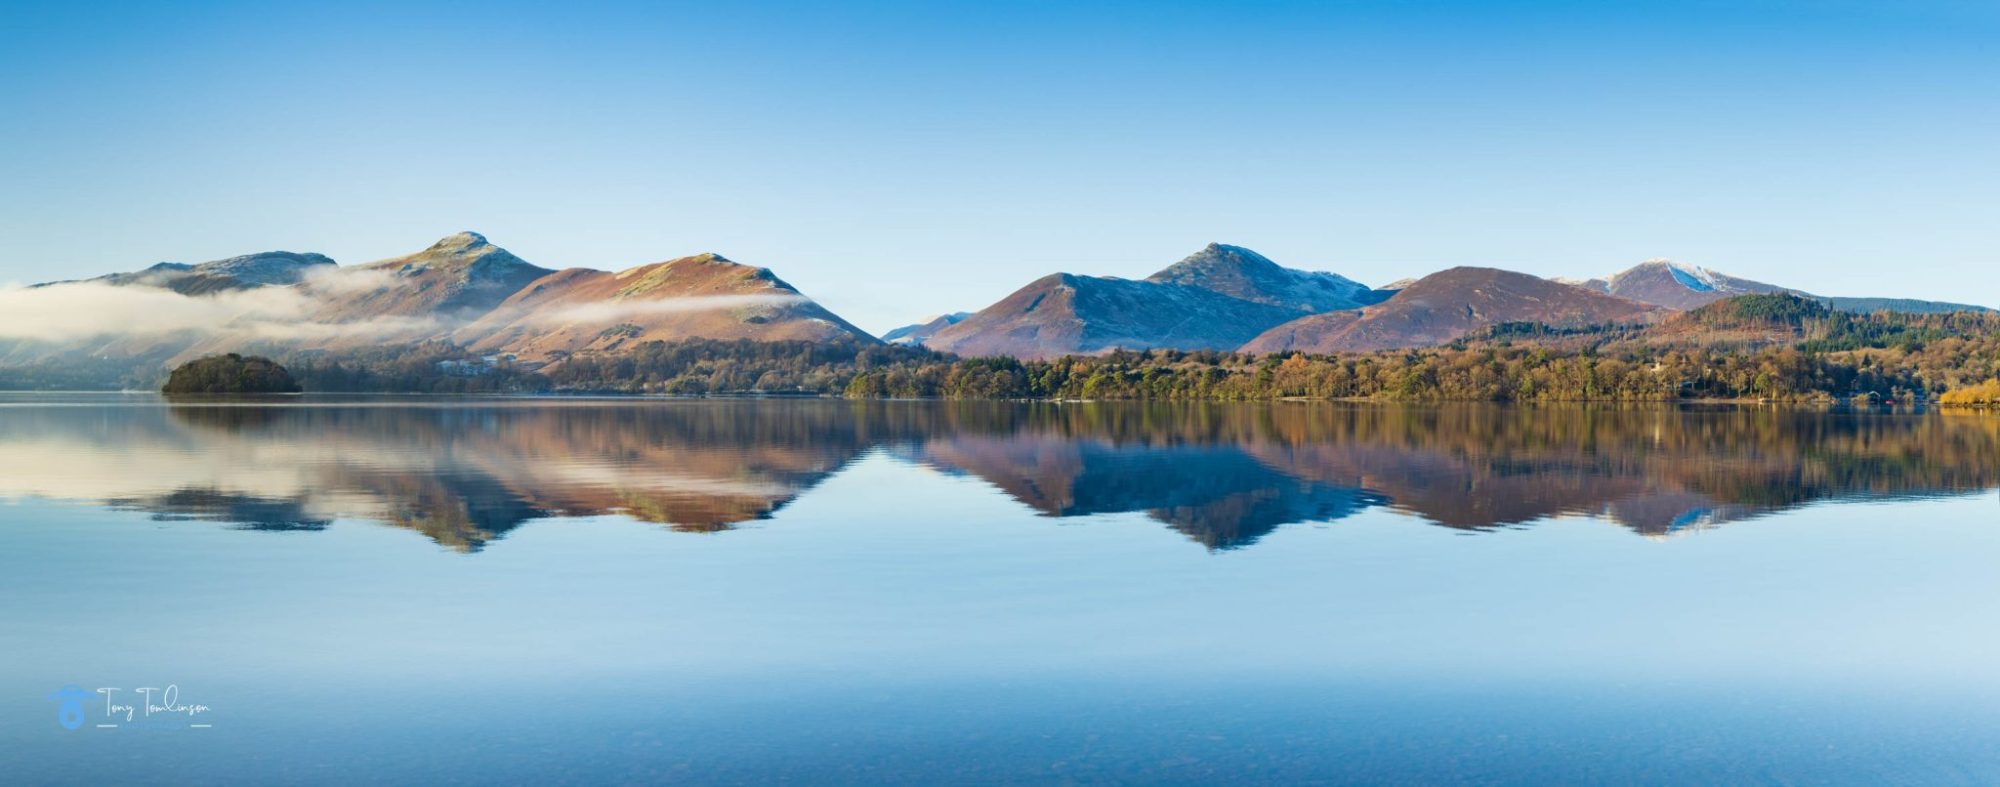 Tony-Tomlinson-Photography-Derwent-Water-Lake-District-panoramic